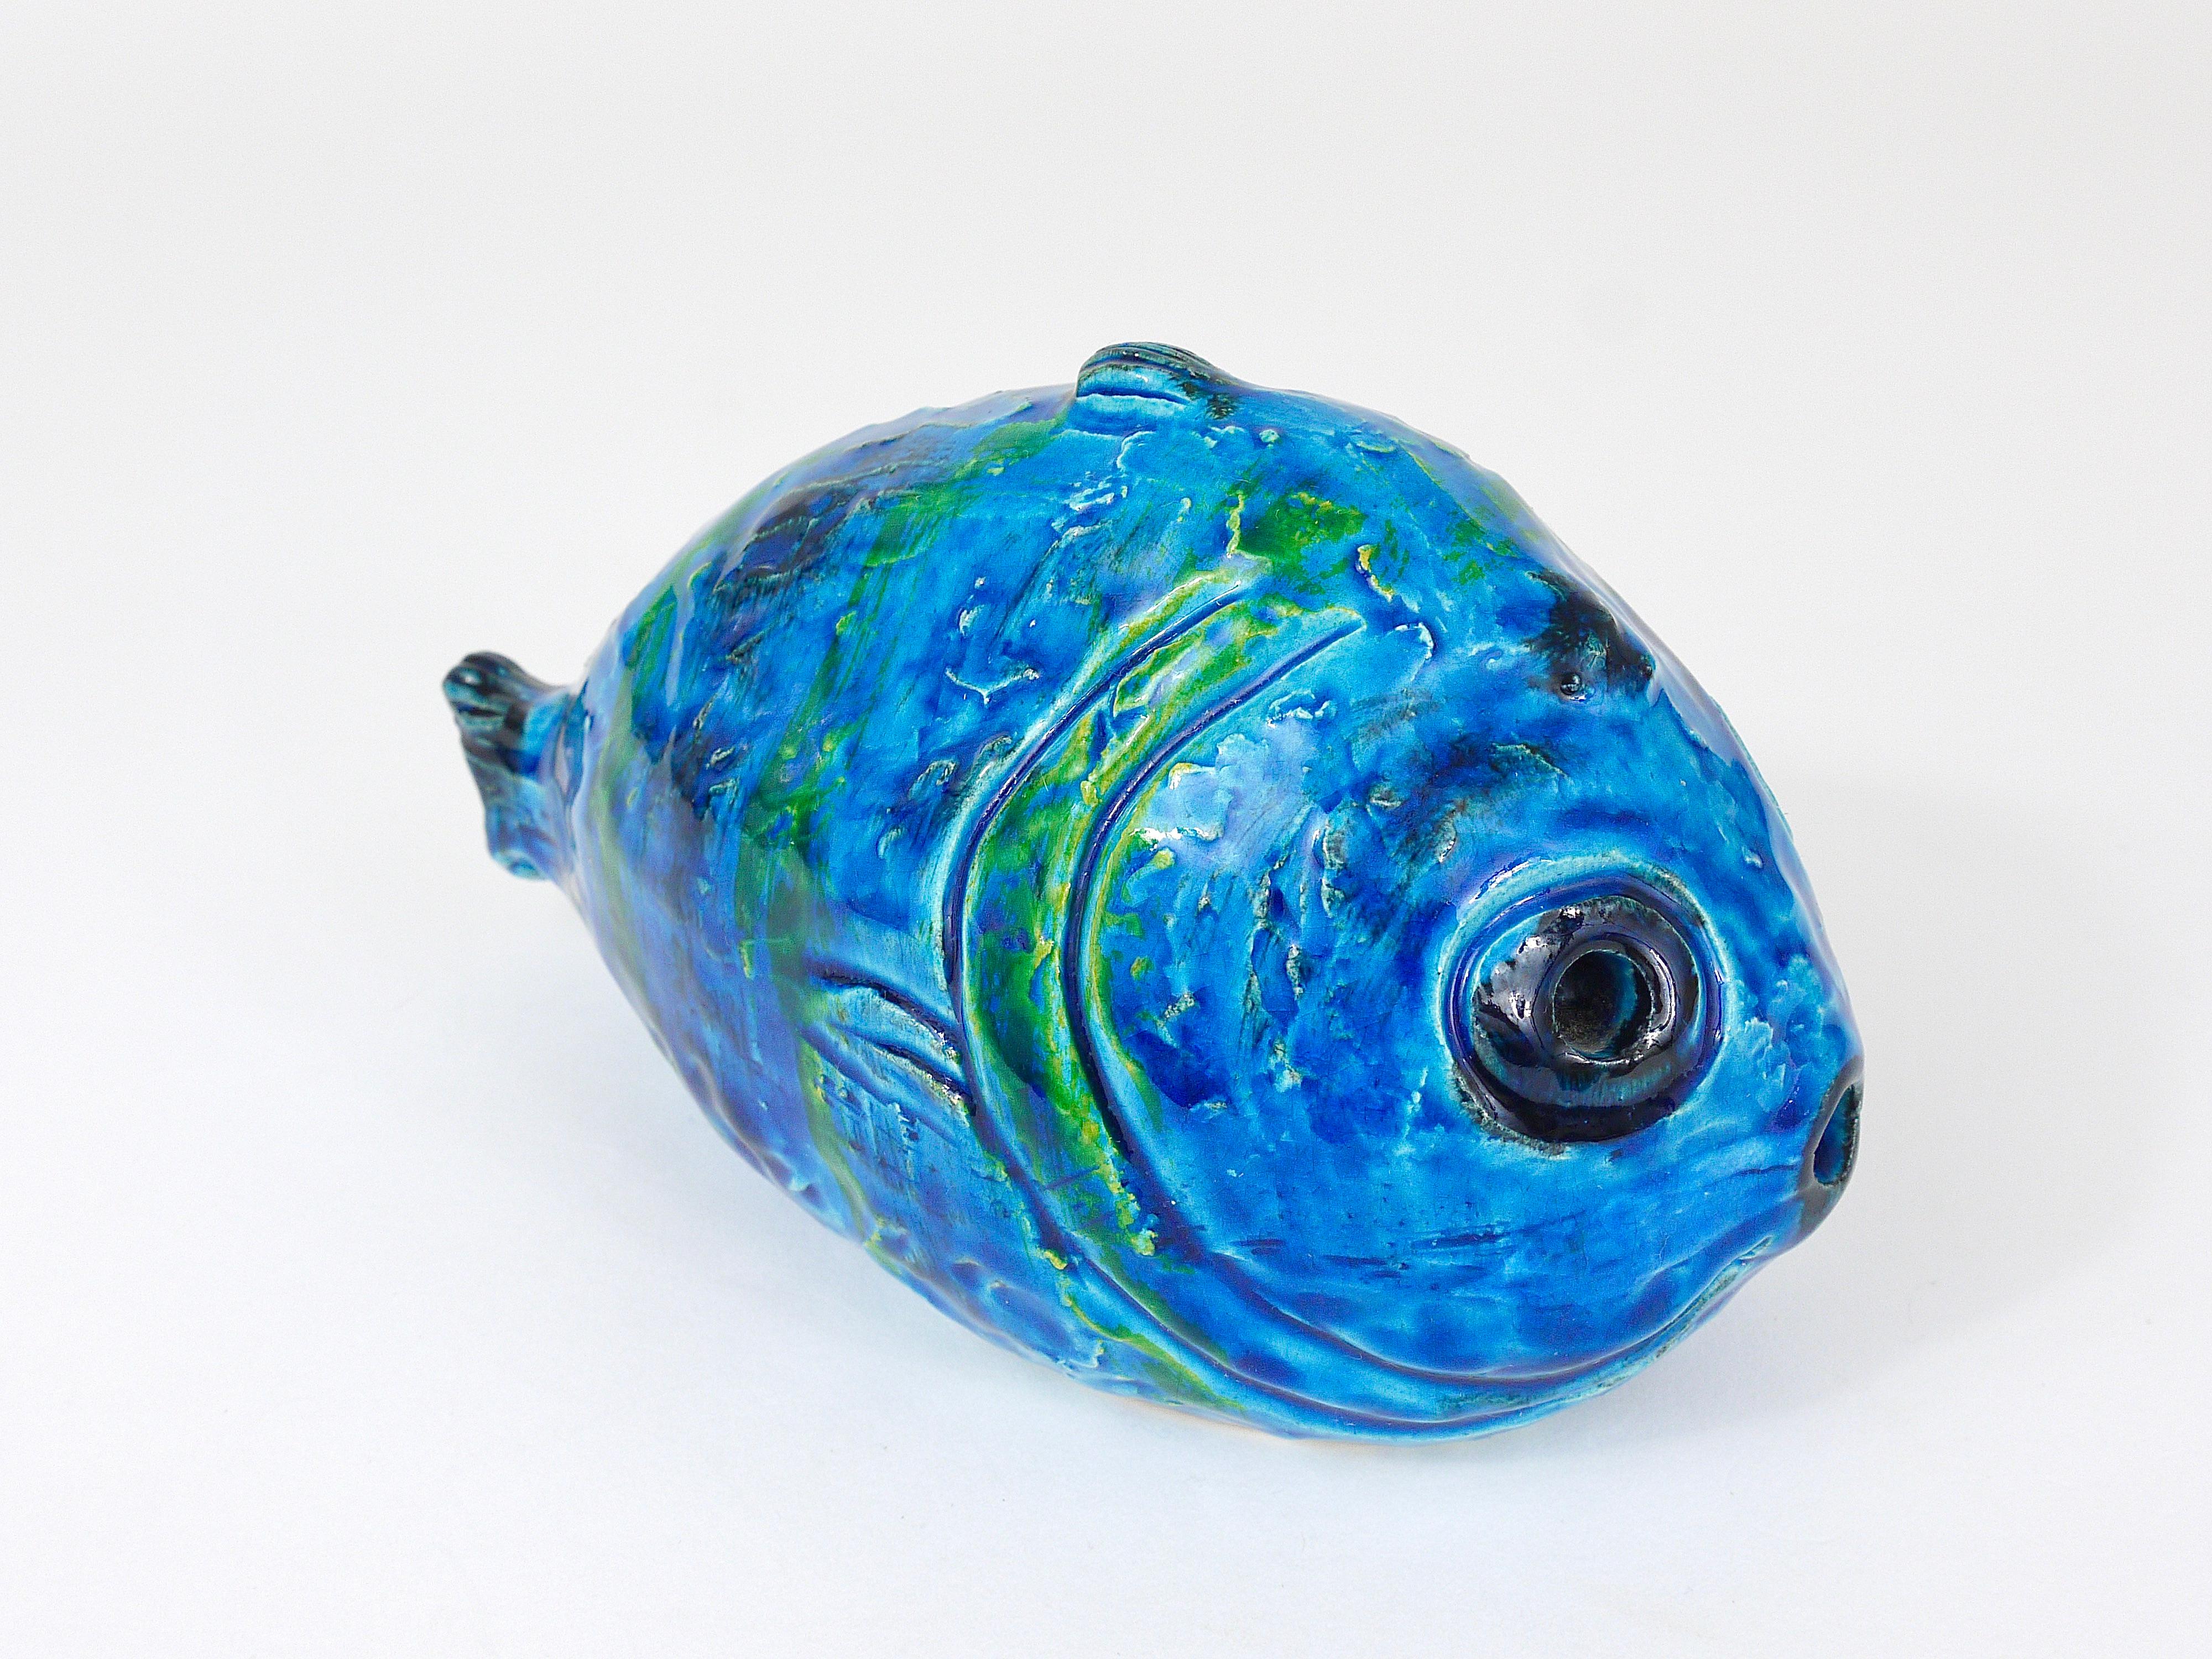 Aldo Londi Bitossi Rimini Blue Glazed Fish Sculpture Figurine, Italy, 1950s For Sale 2